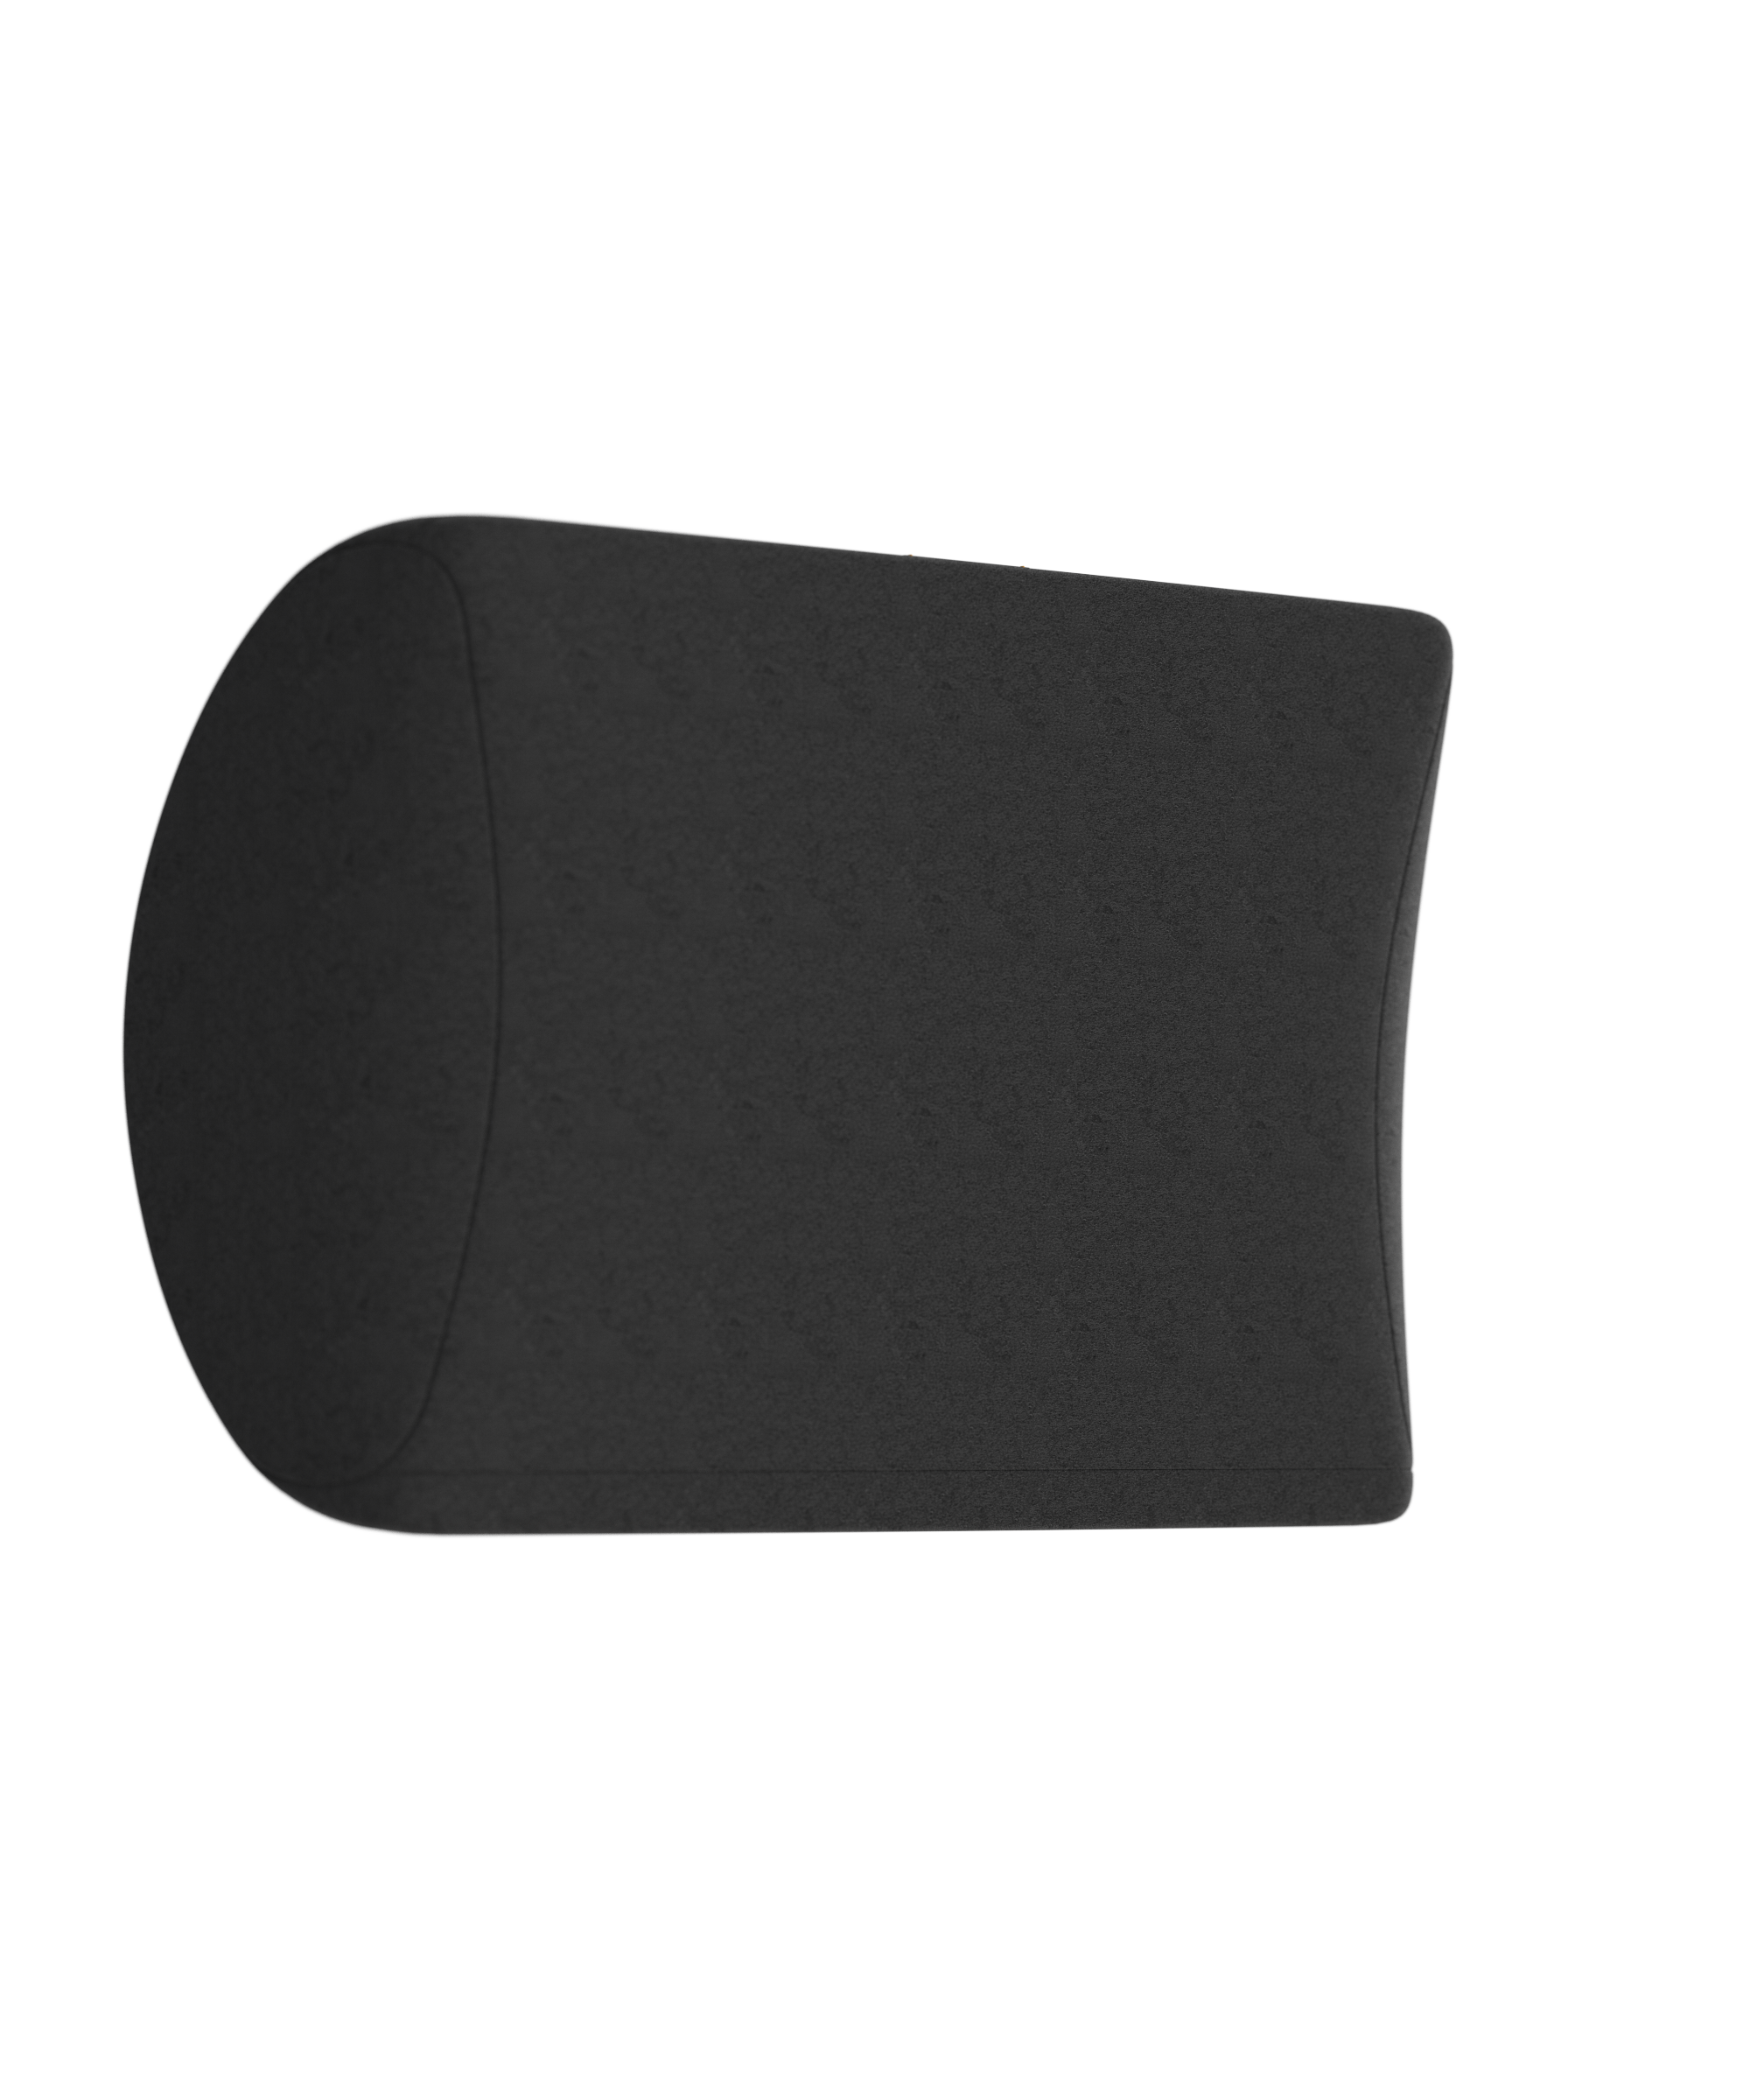 Memory Foam Lumbar Support Back Cushion Ergonomic Lumbar black For